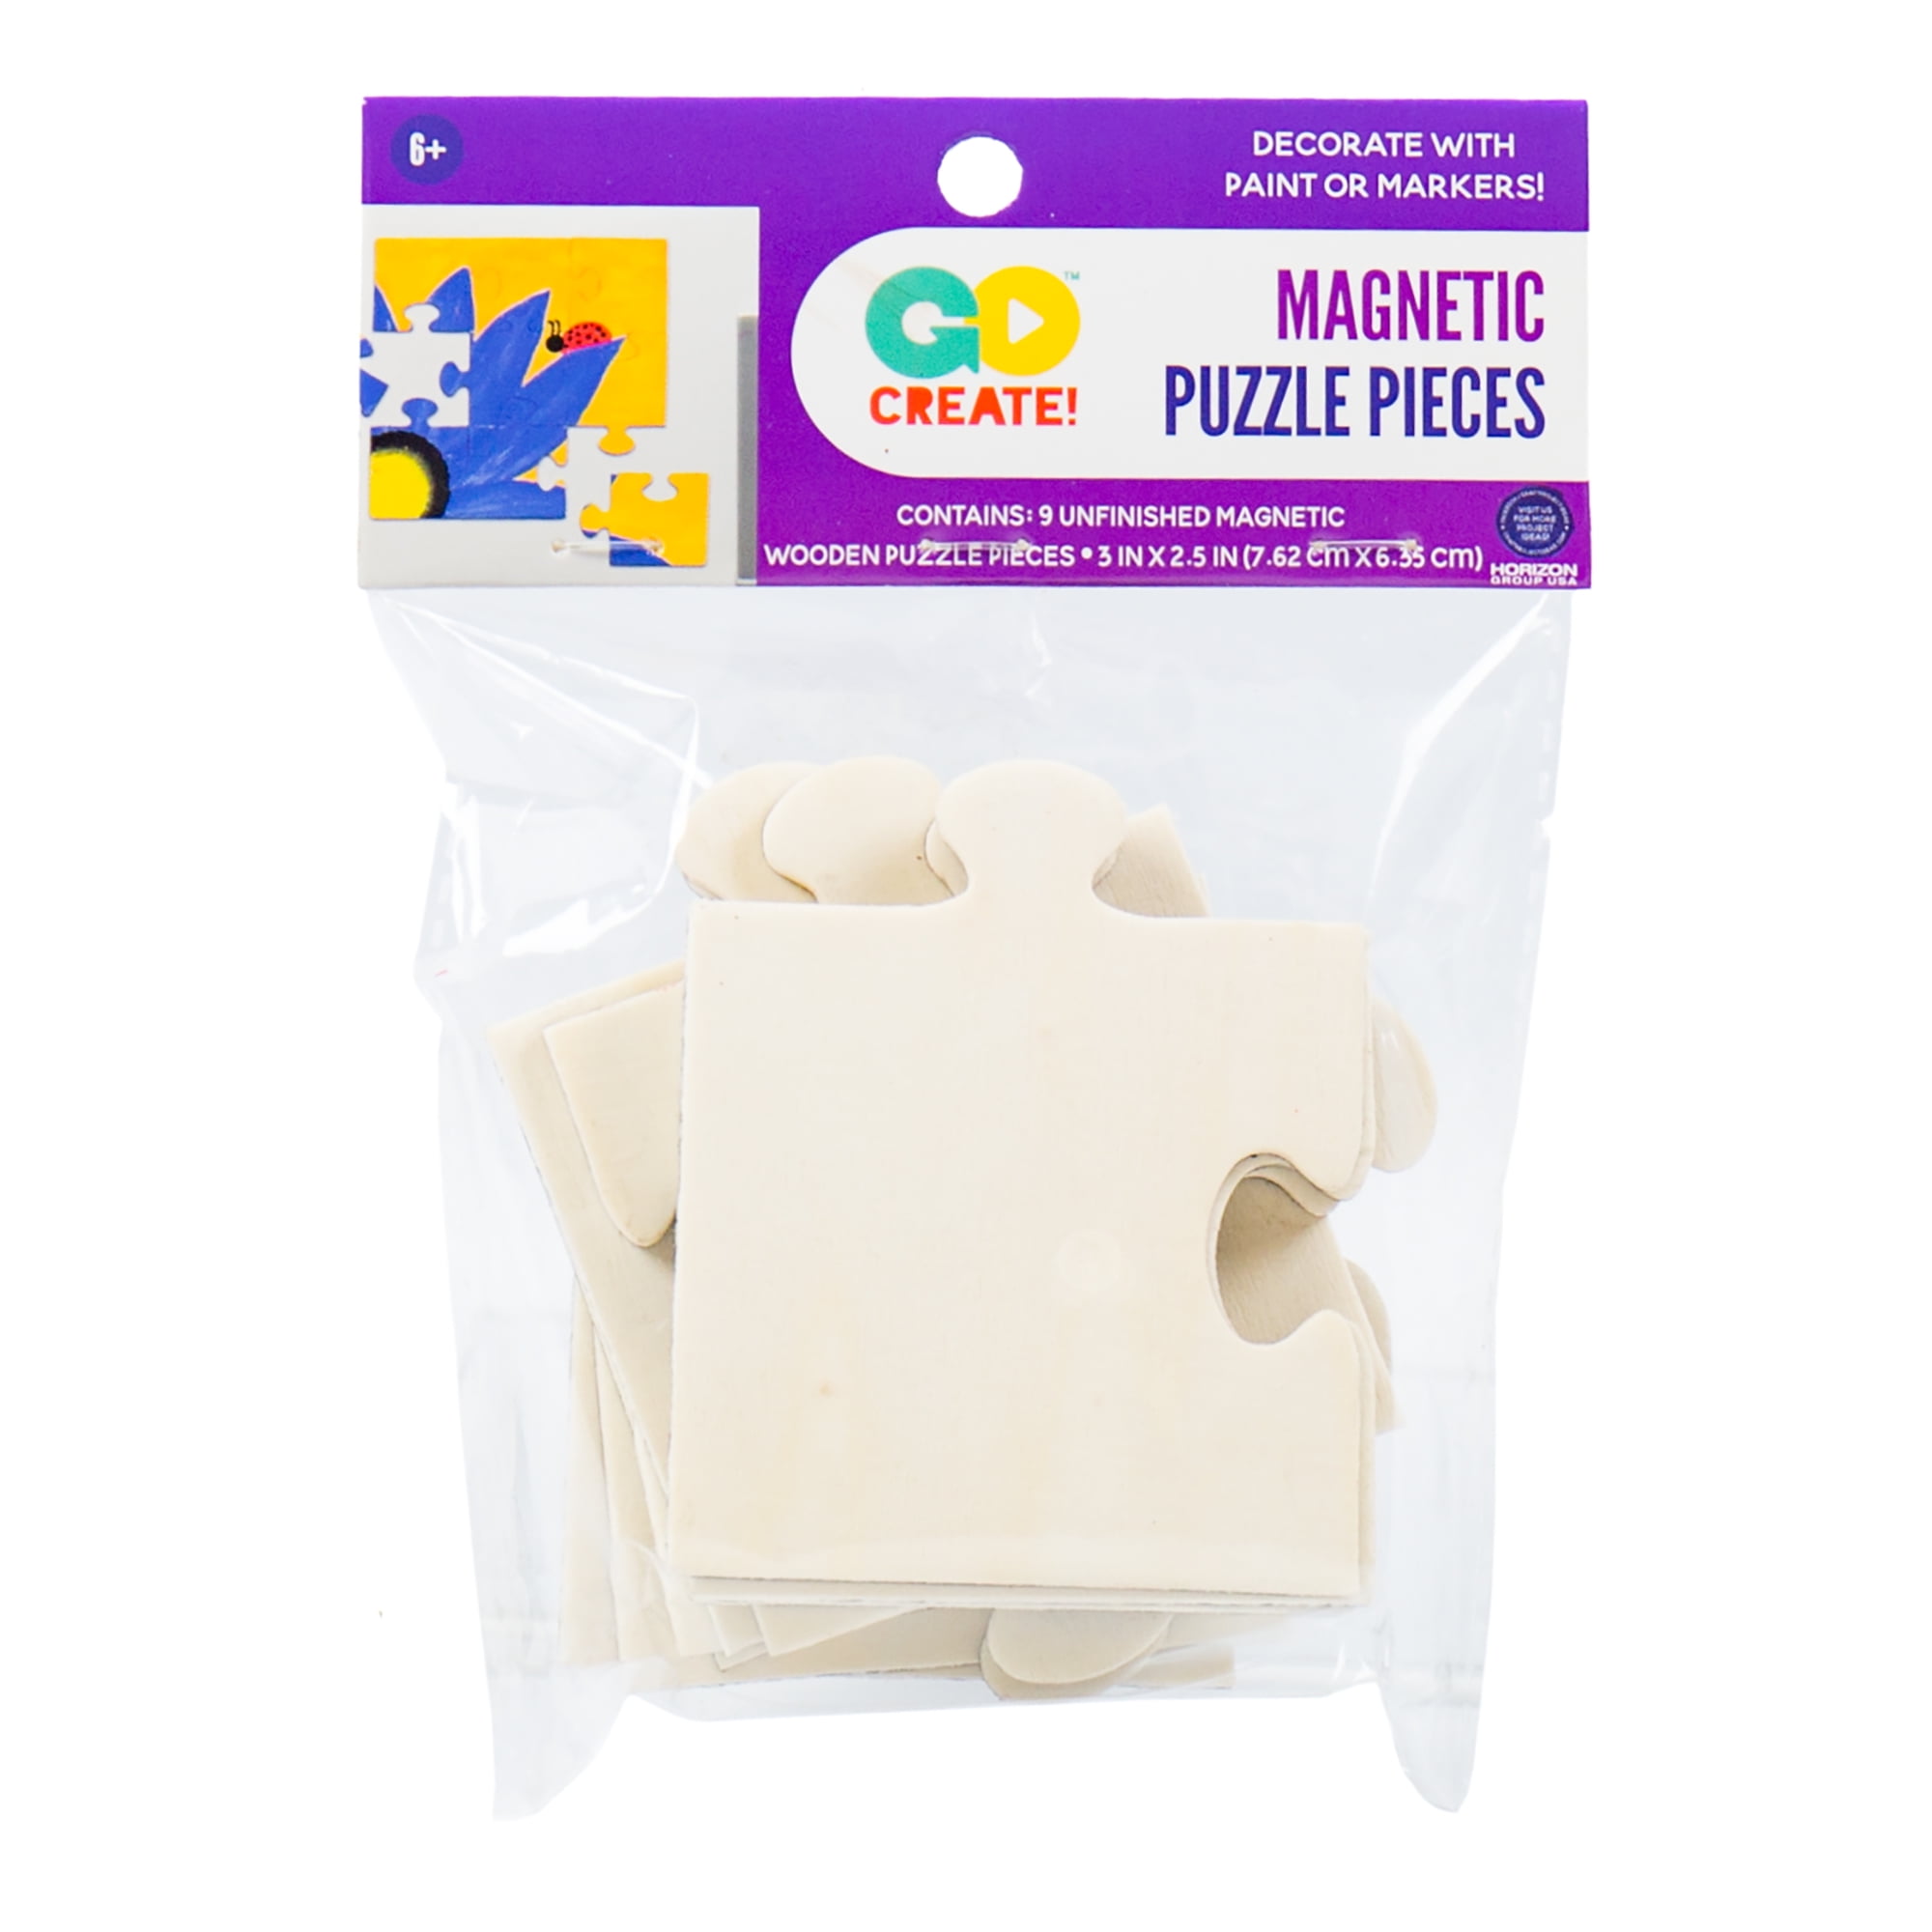 Go Create Wooden Magnetic Puzzle Pieces 9 Unfinished Magnet Pieces Walmart Com